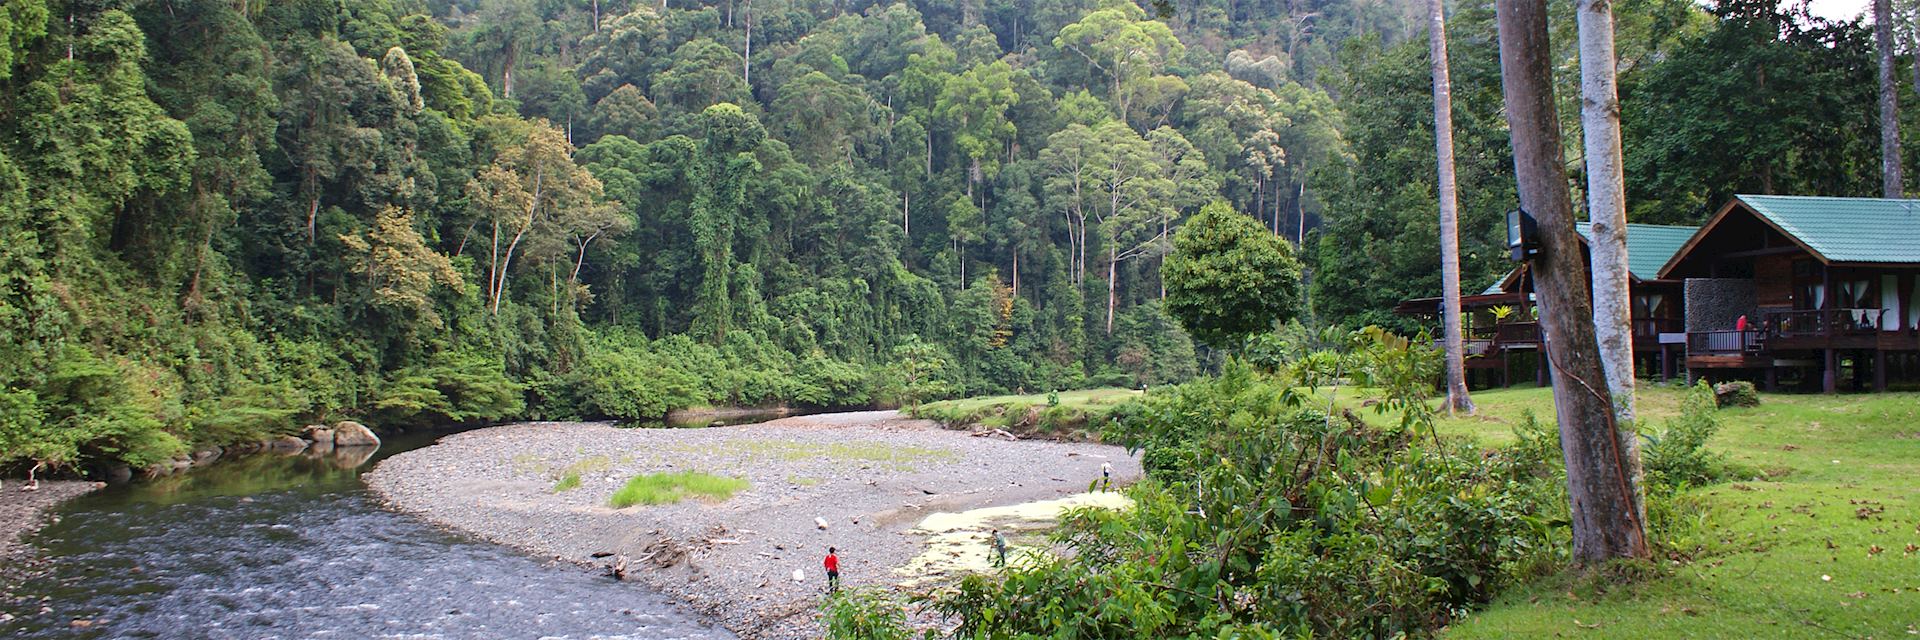 Borneo Rainforest Lodge in the Danum Valley